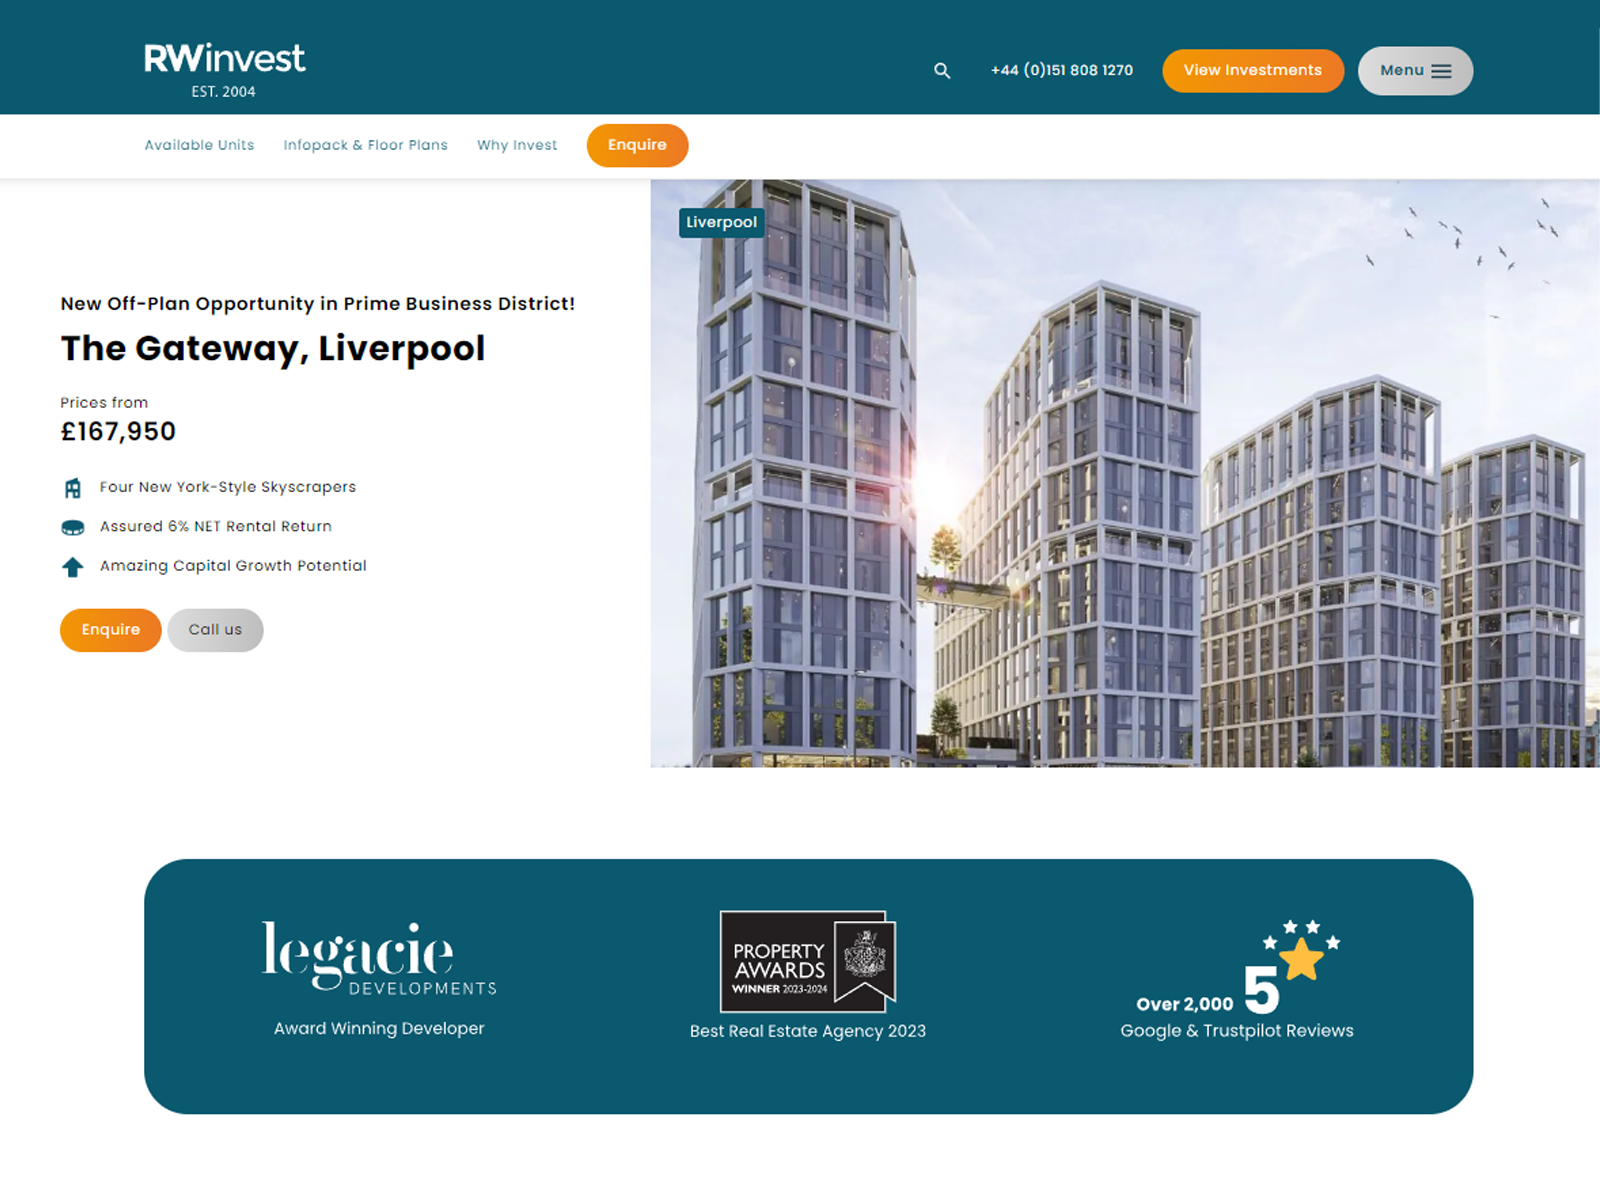 The Gateway Property Development in Liverpool